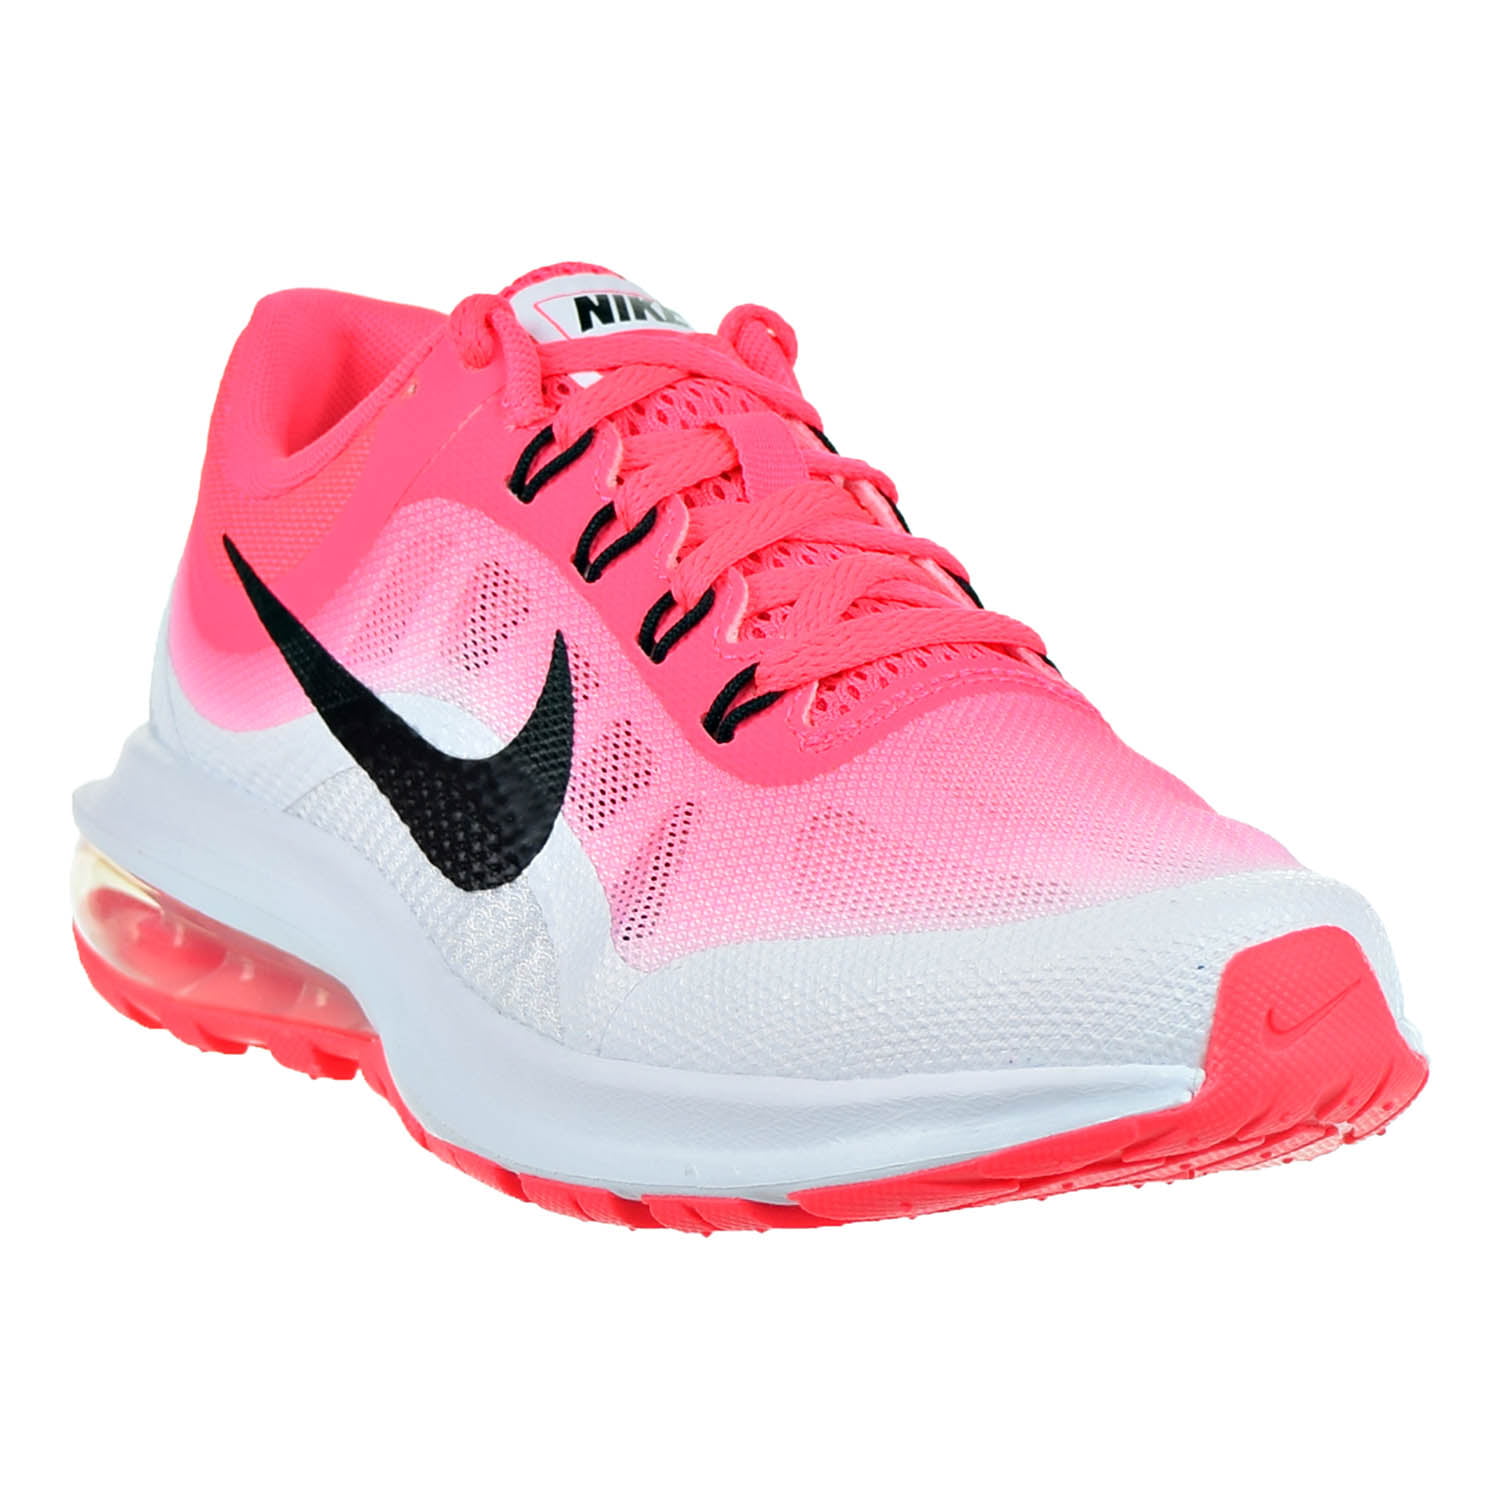 Nike Air Dynasty 2 Big Kid's Racer Pink/Black/White 859577-600 - Walmart.com